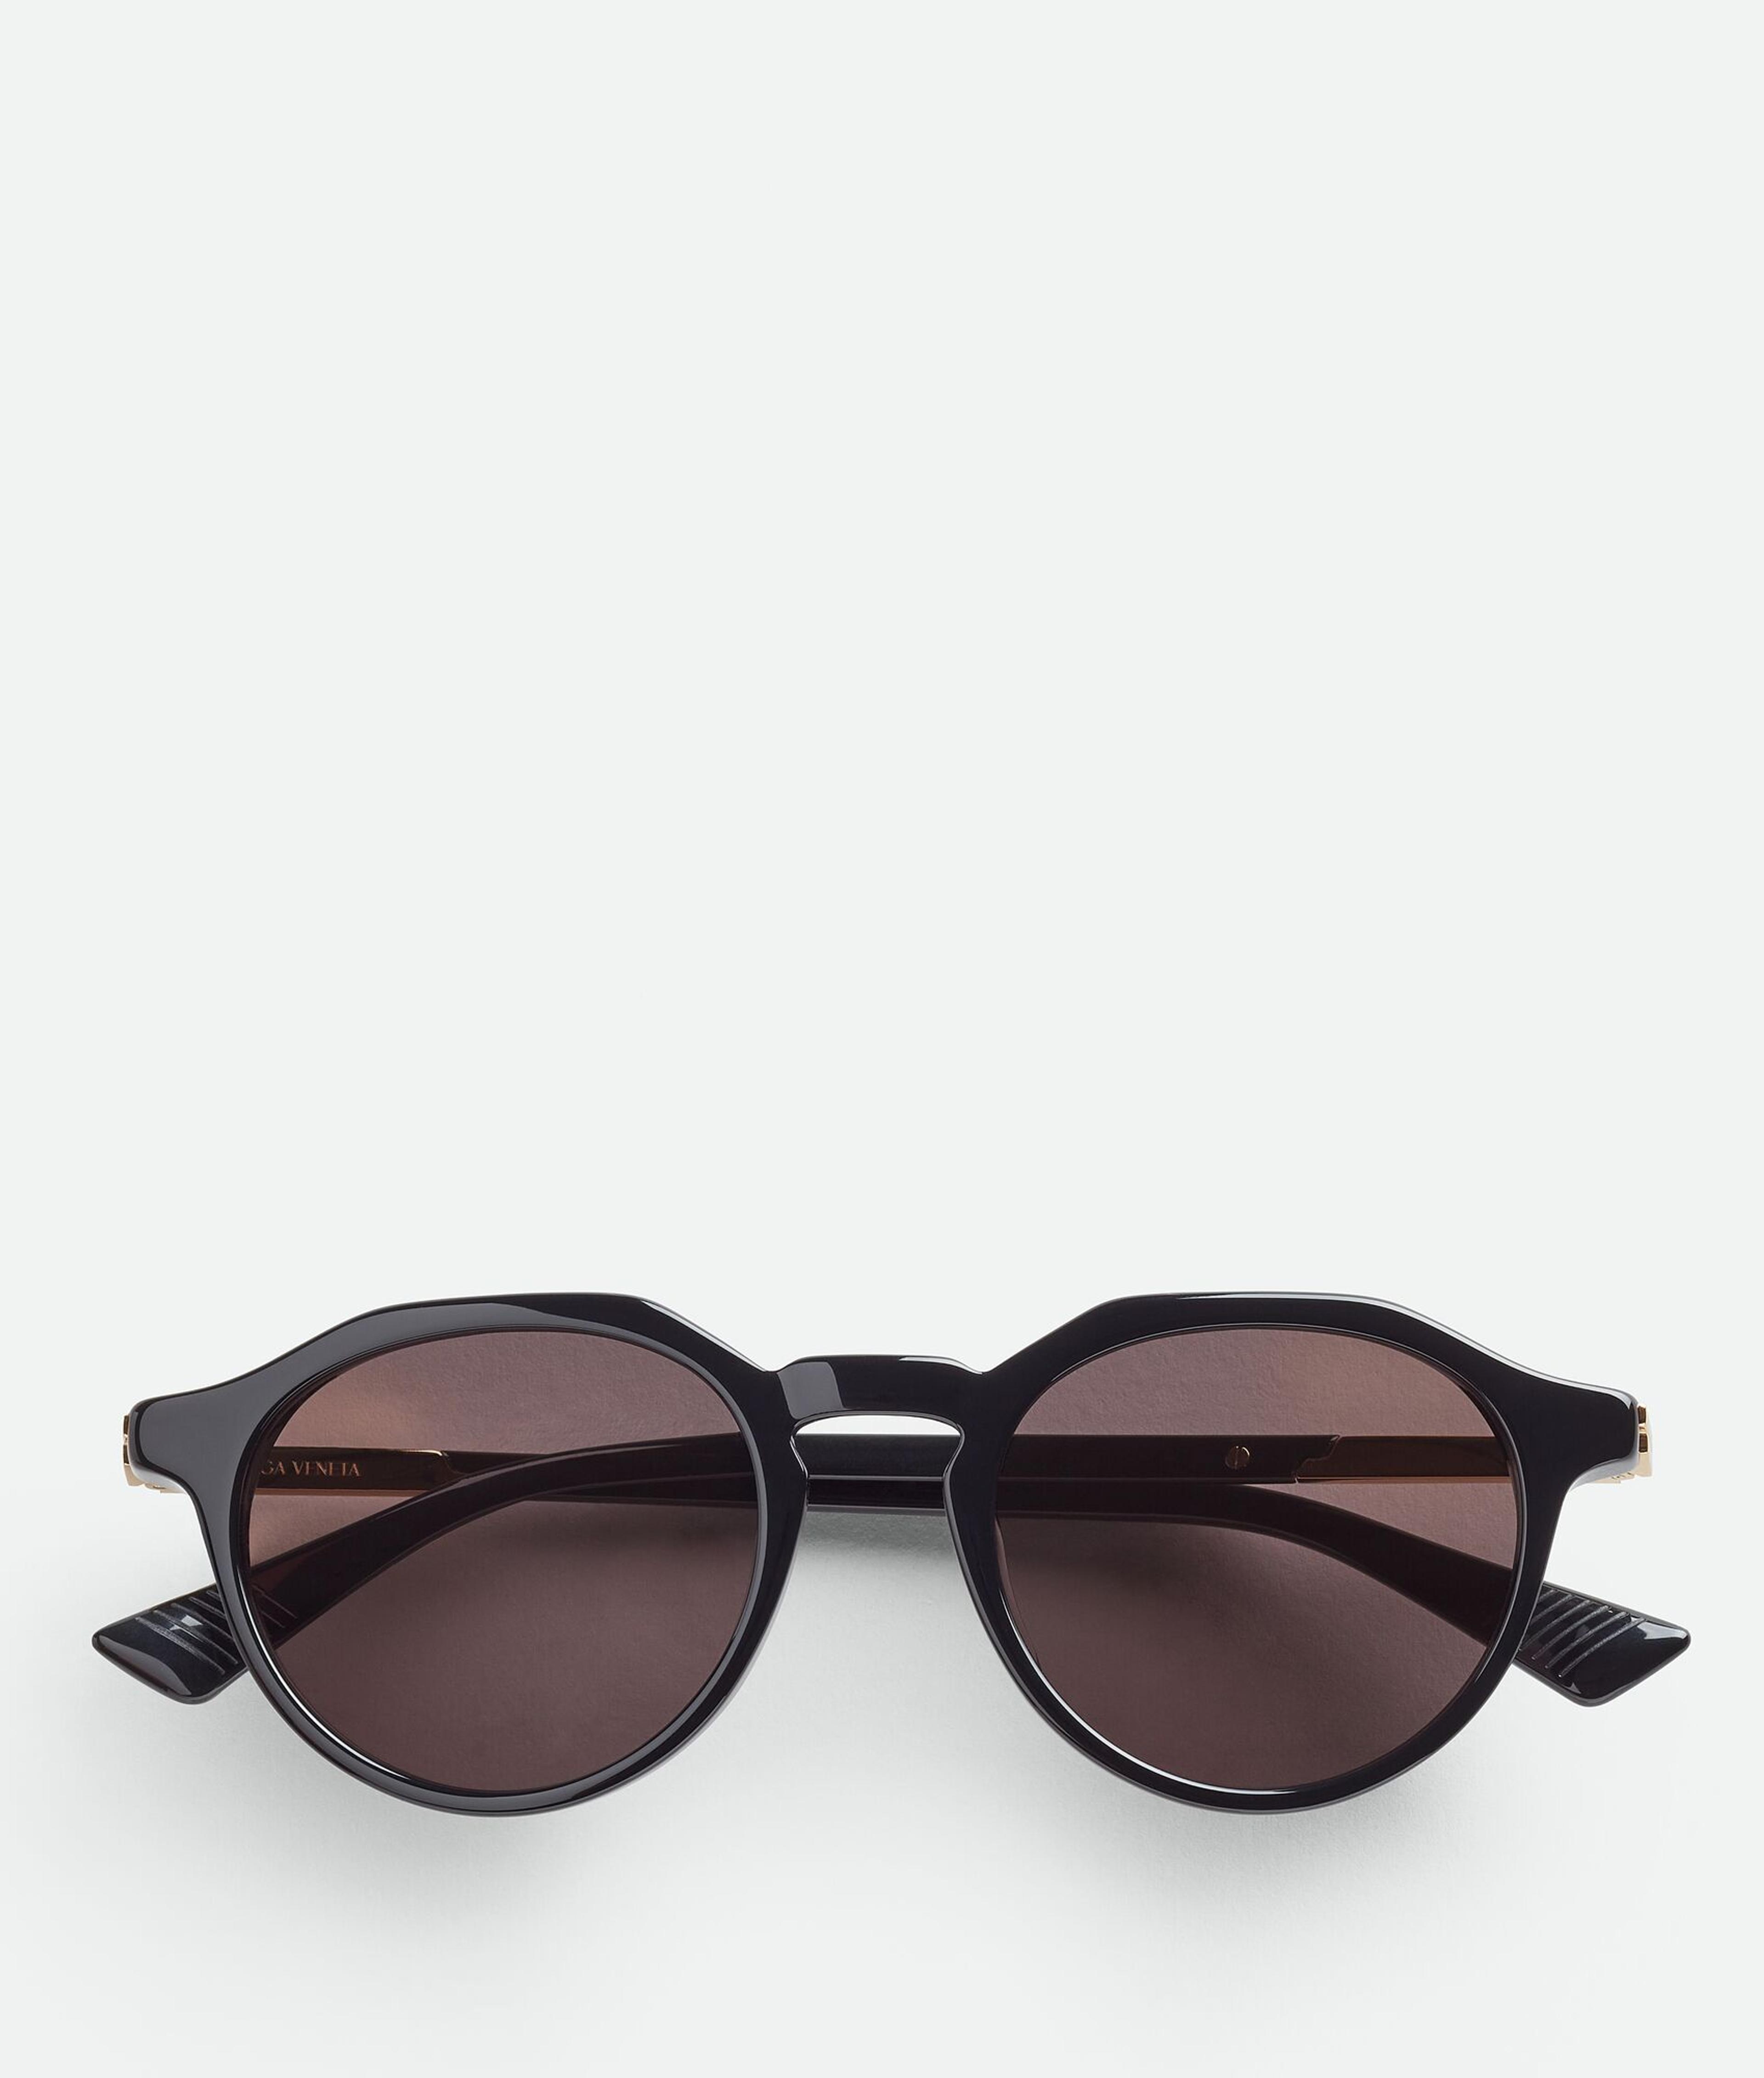 Bottega Veneta® Men's Forte Panthos Sunglasses in Black/grey. Shop online now.